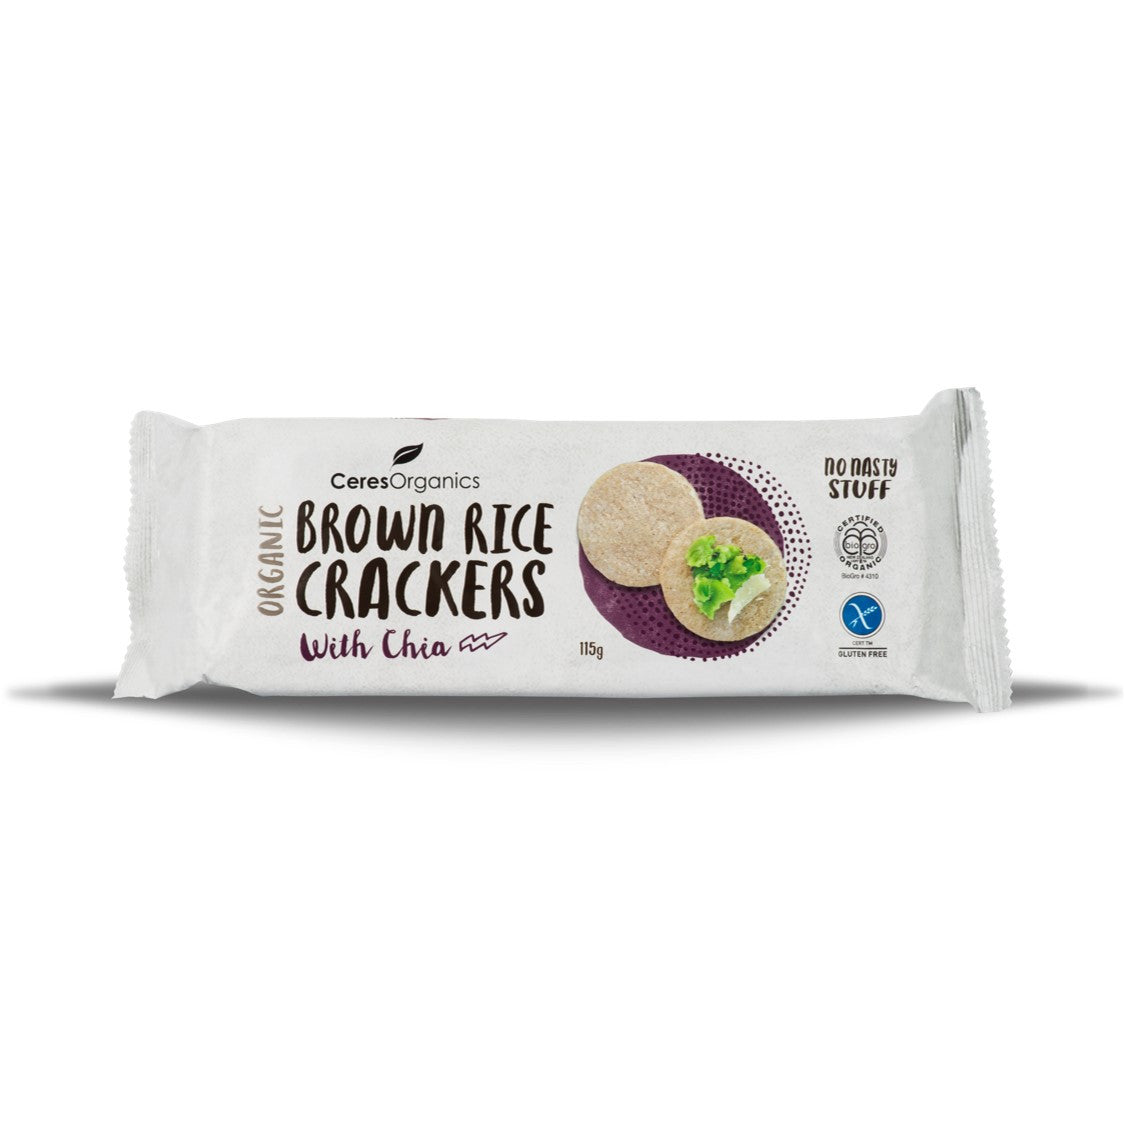 Ceres Organics Brown Rice Crackers - with Chia, 115 g.-NaturesWisdom